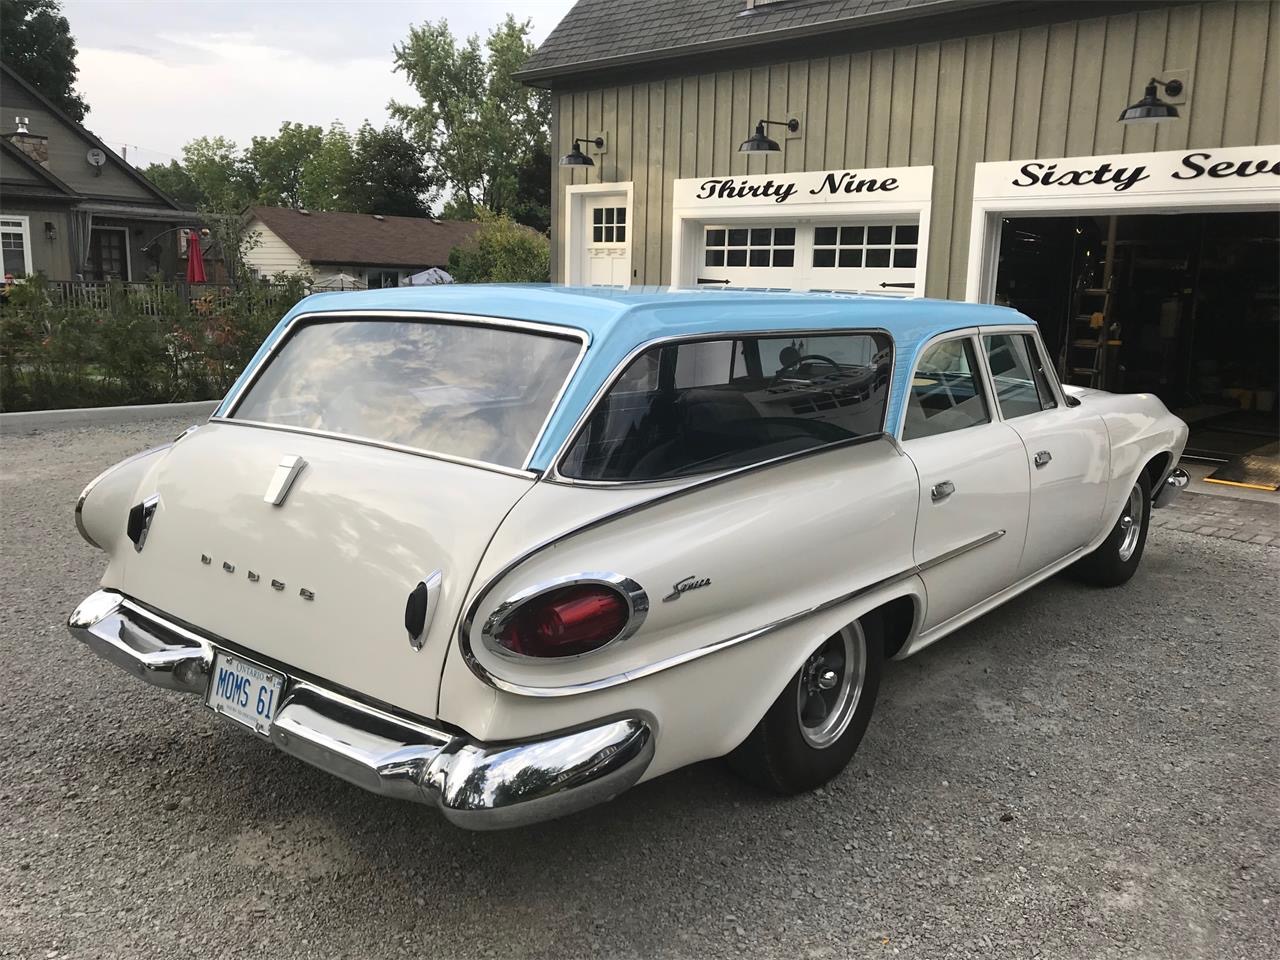 1961 Dodge Seneca wagon features dramatic design